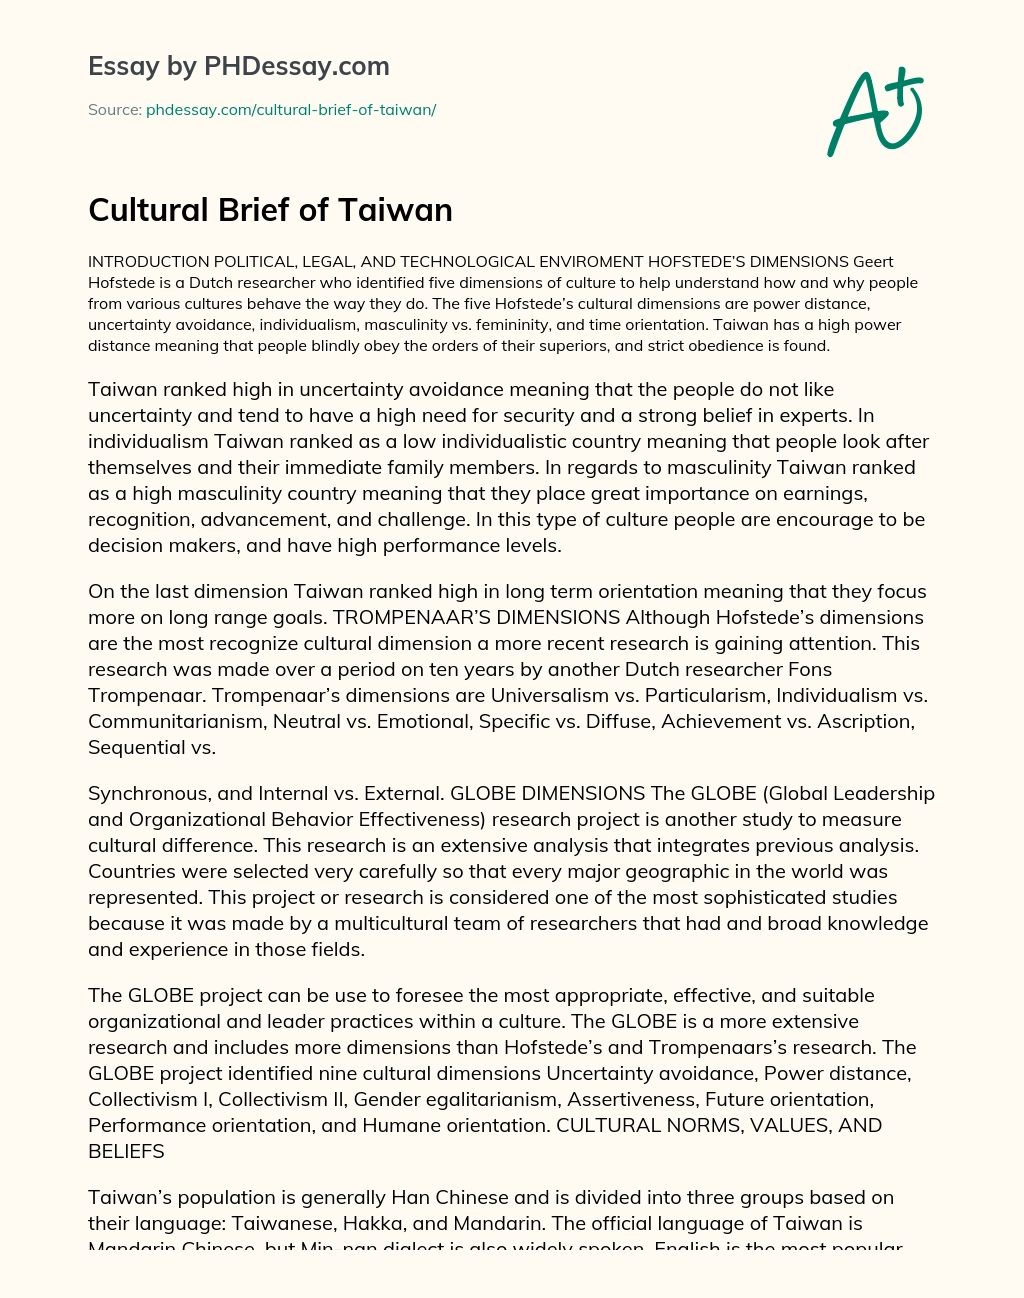 Cultural Brief of Taiwan essay